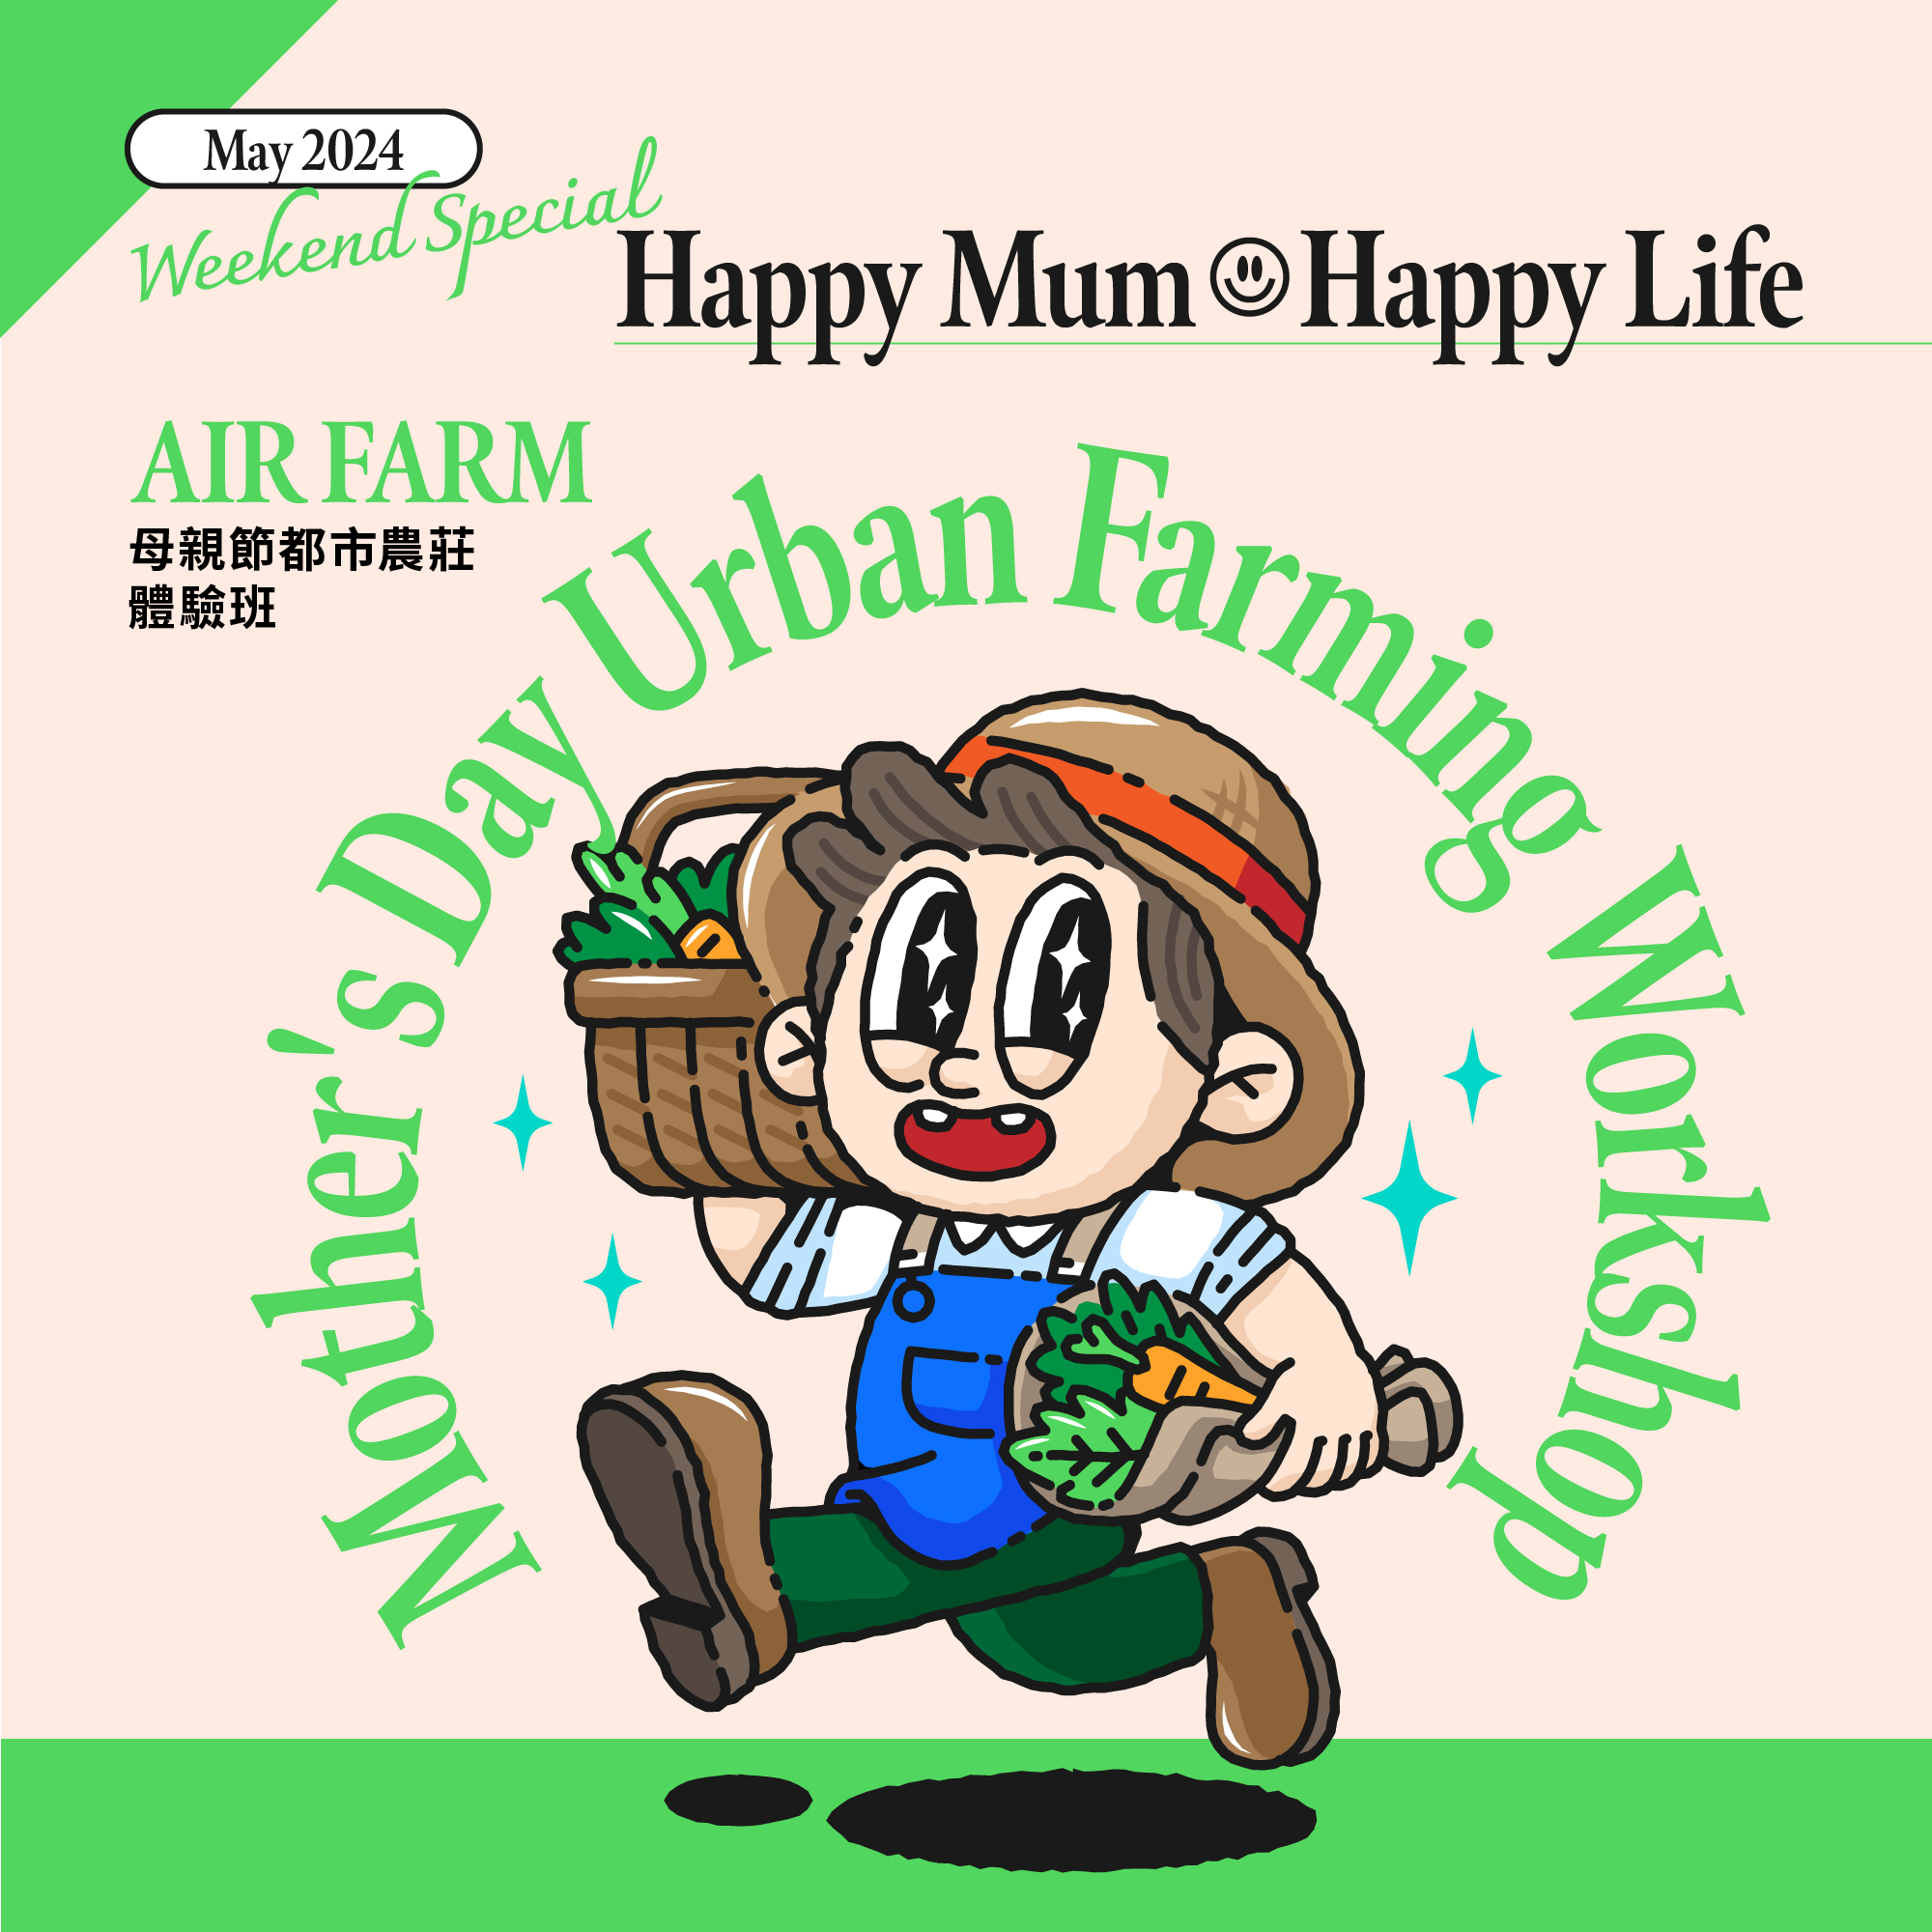 AIR FARM : 母亲节都市农庄体验班